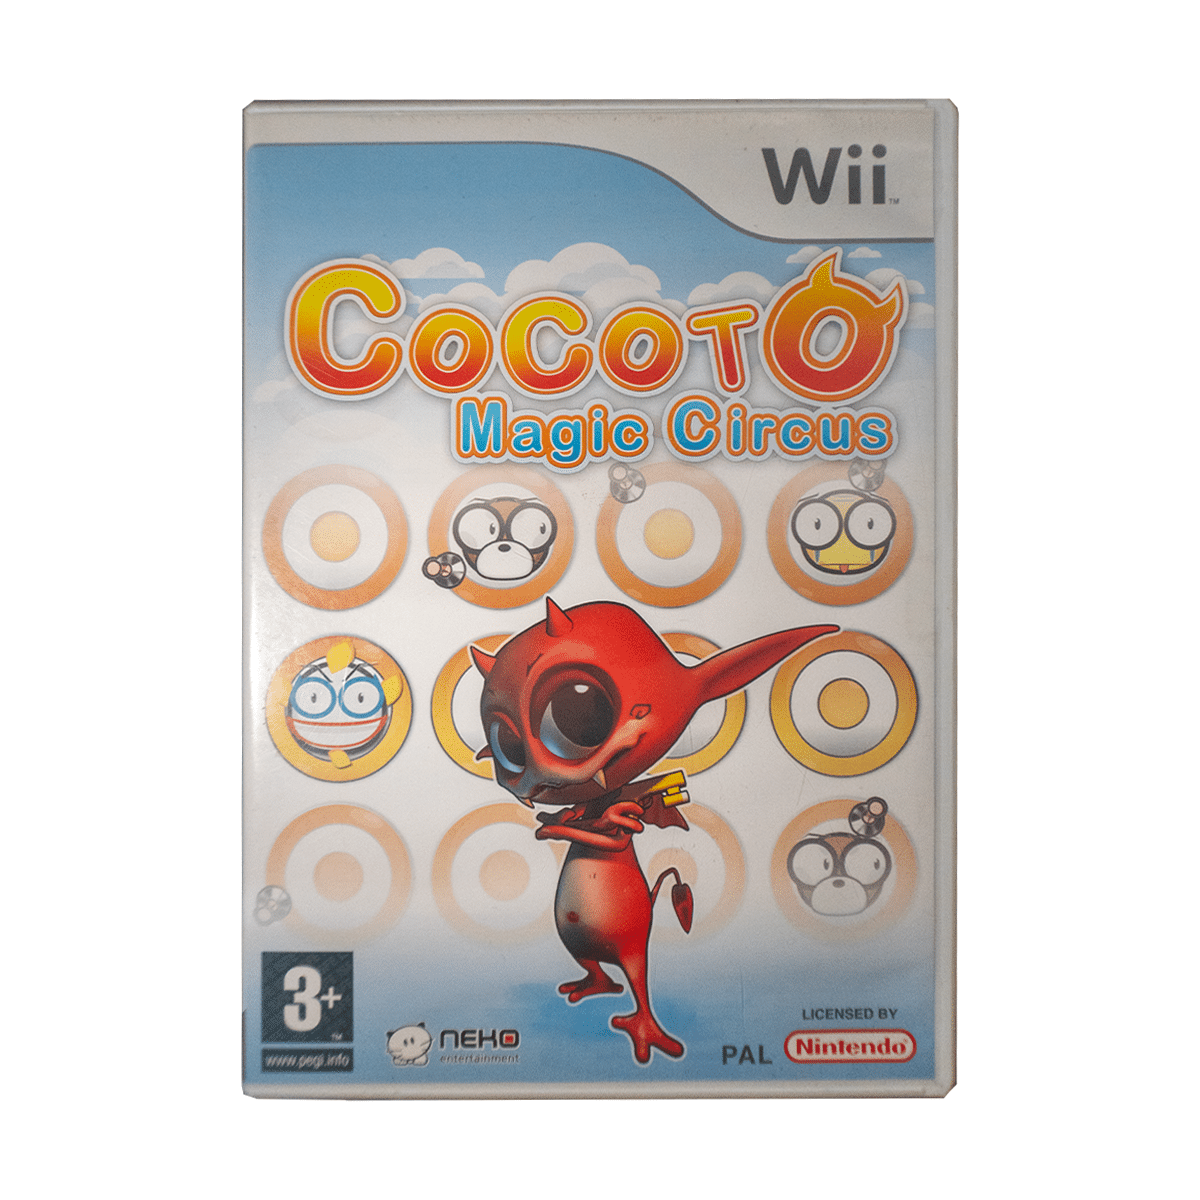 Sophie absorption Formindske Cocoto Magic Circus - Nintendo Wii Spil - Retro Spilbutik